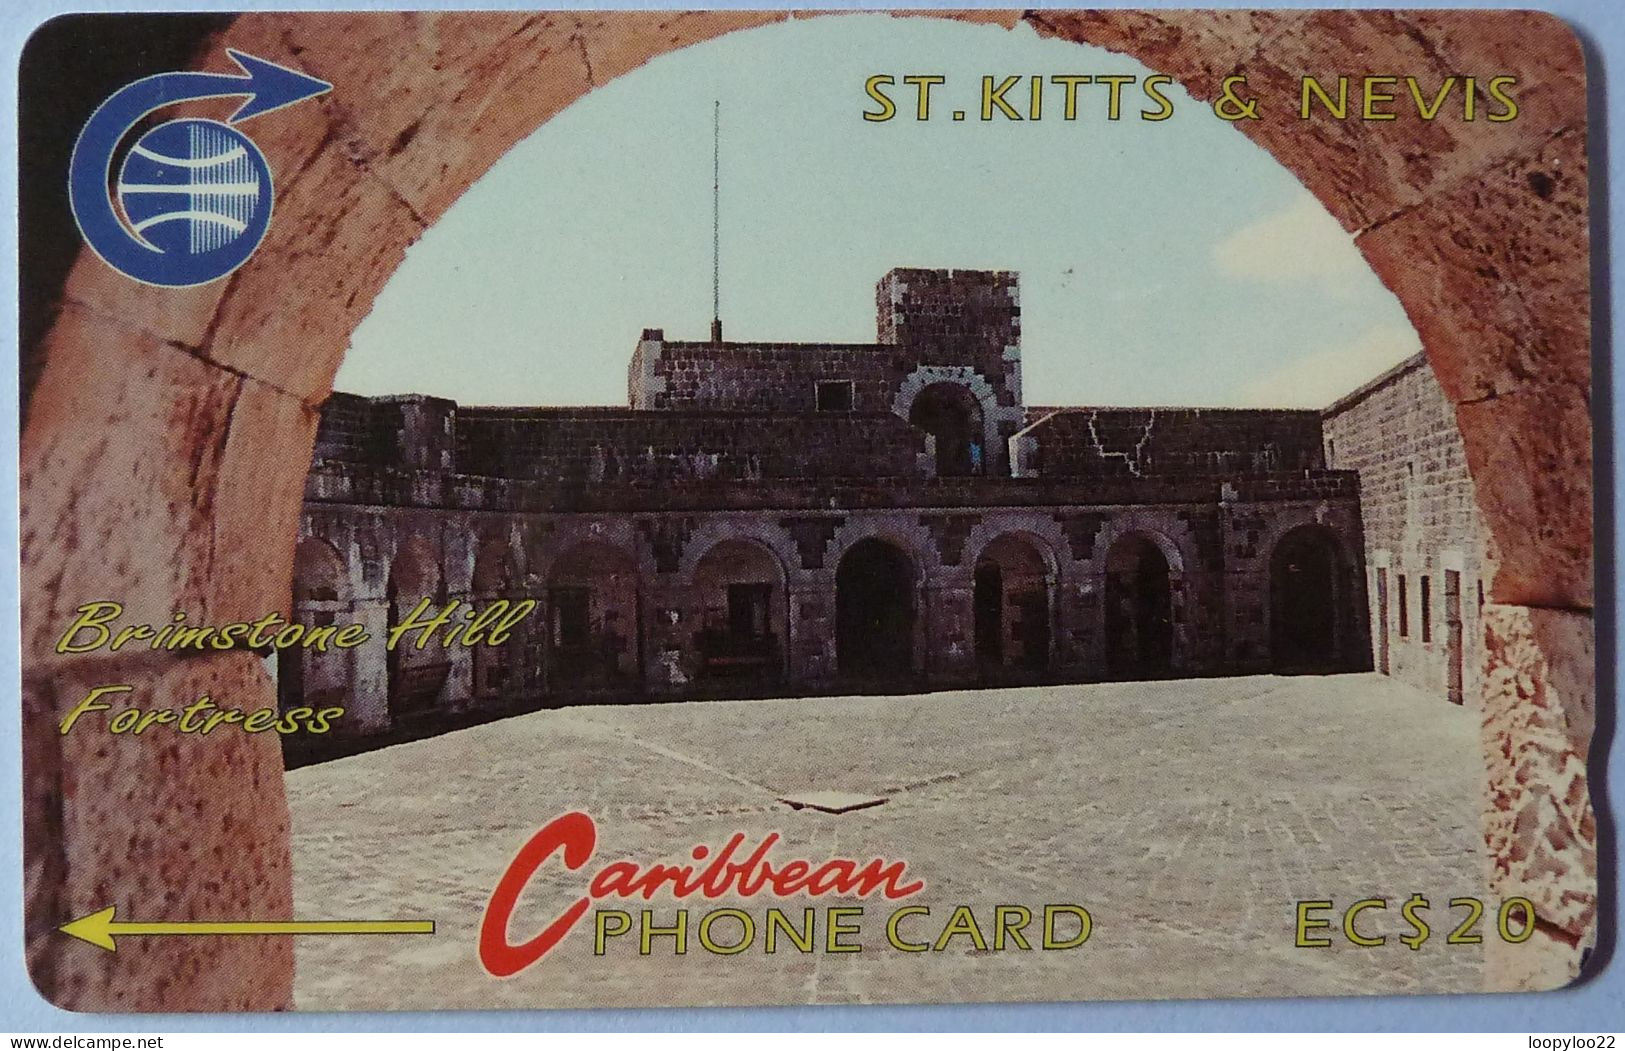 ST KITTS & NEVIS - GPT - STK-3C - Brimstone Hill Fortress - $20 - 3CSKC - 1990 - Used - St. Kitts & Nevis